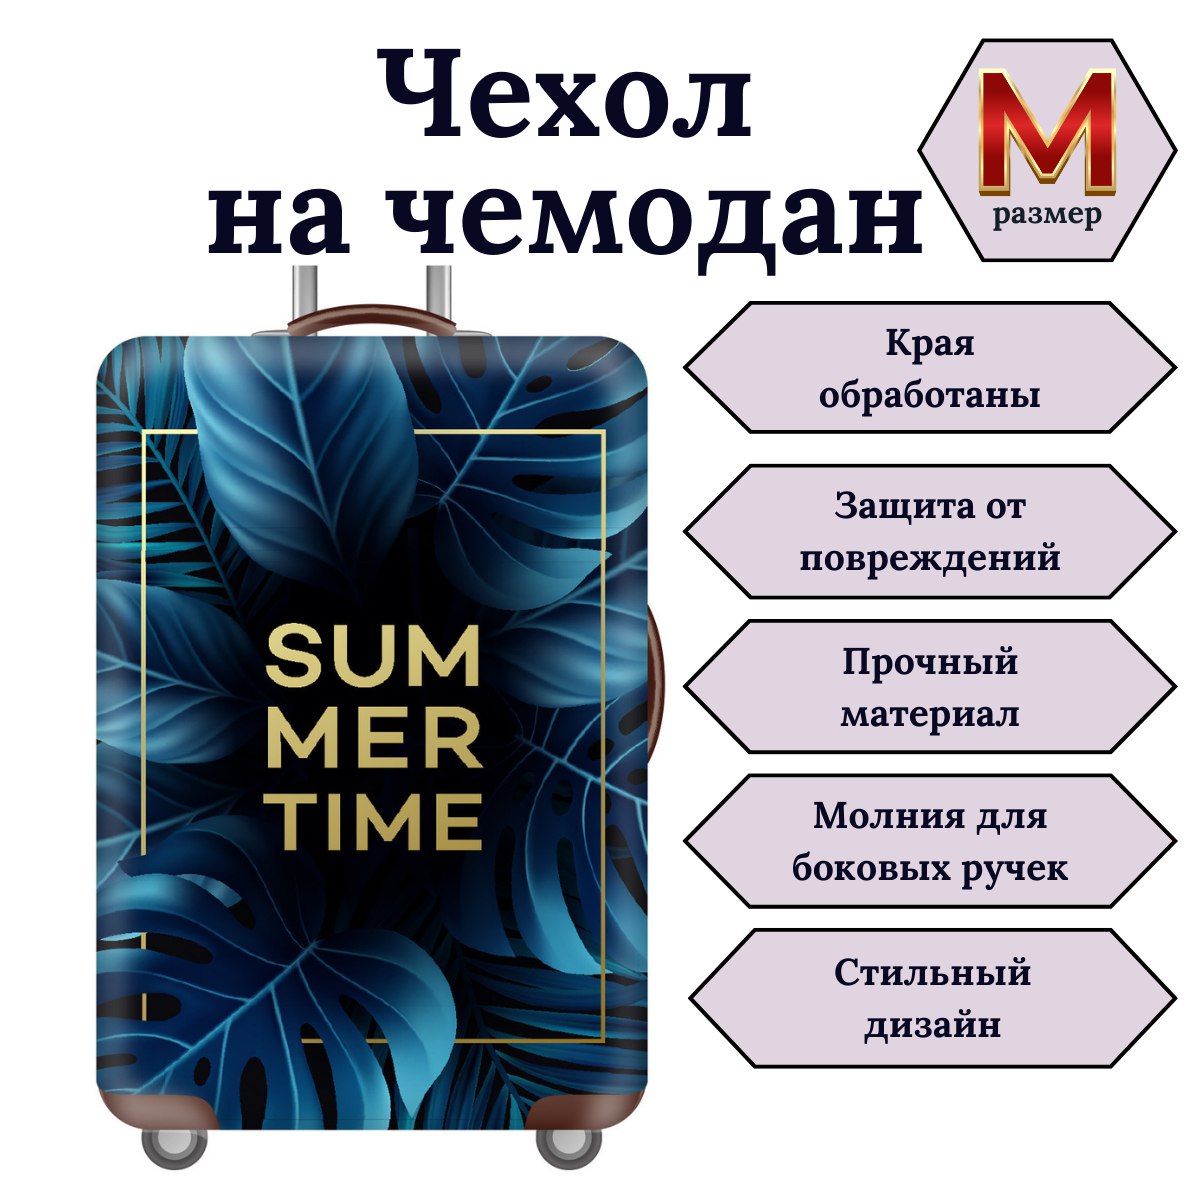 Чехол для чемодана Slaventii 123 summer time, M